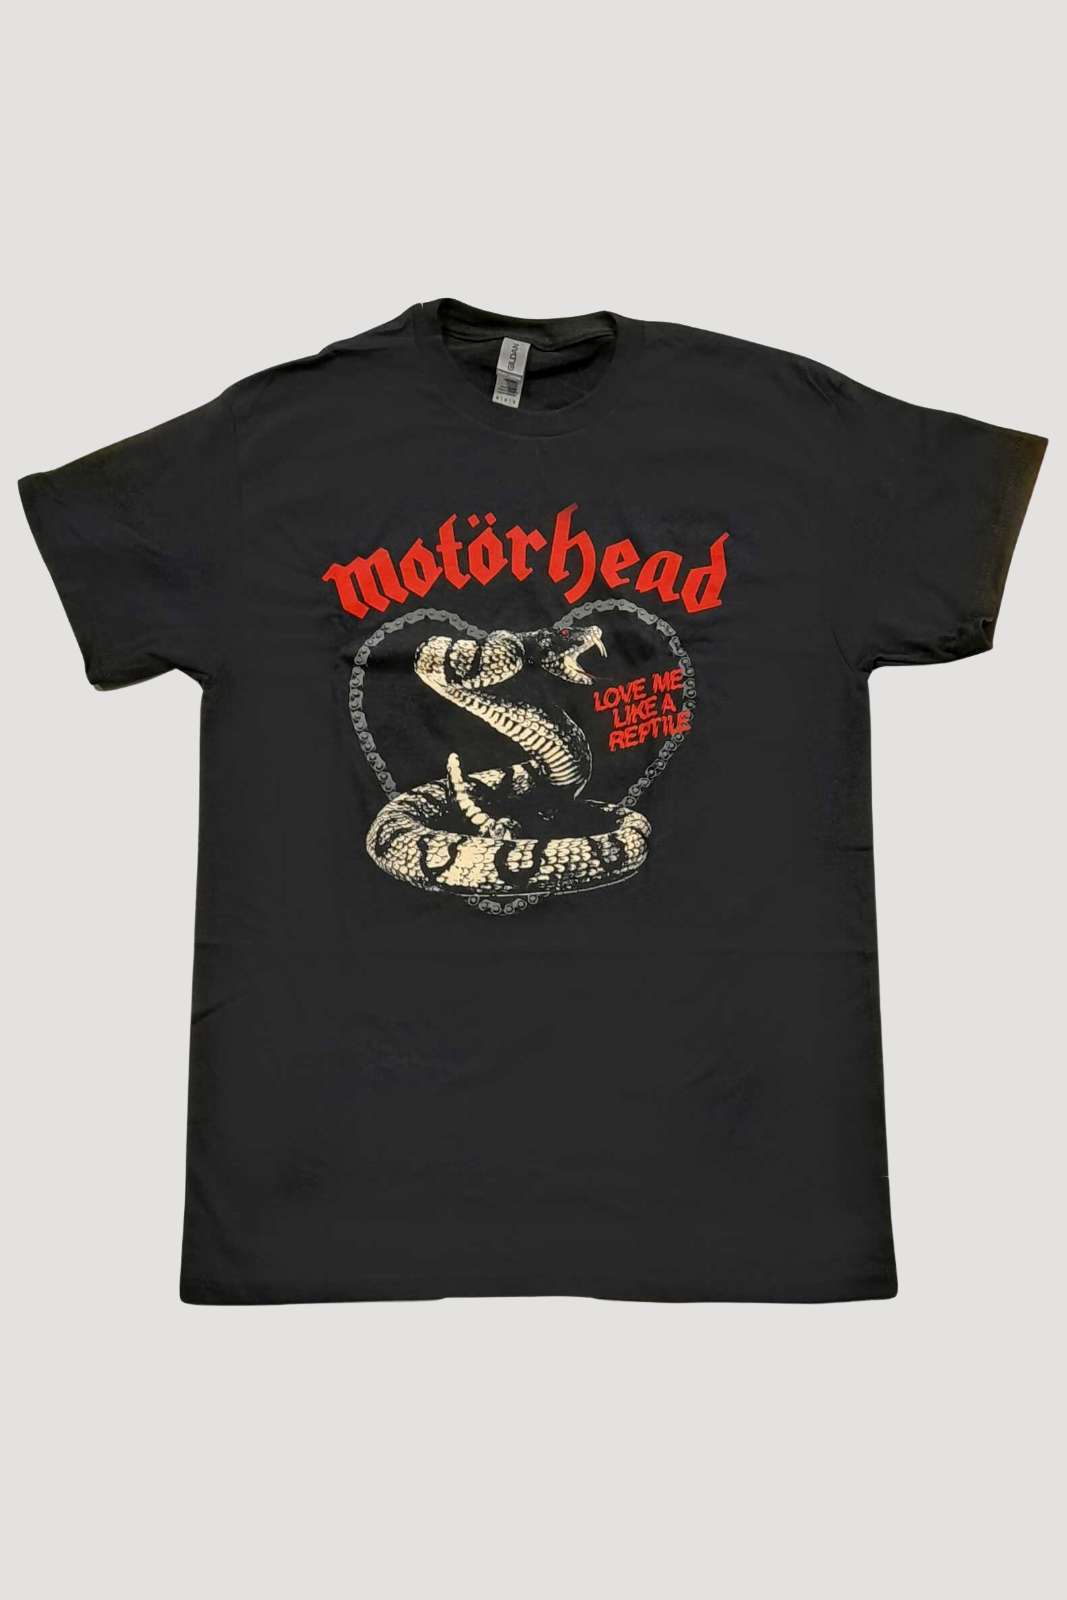 Motörhead Love Me Like A Reptile Shirt